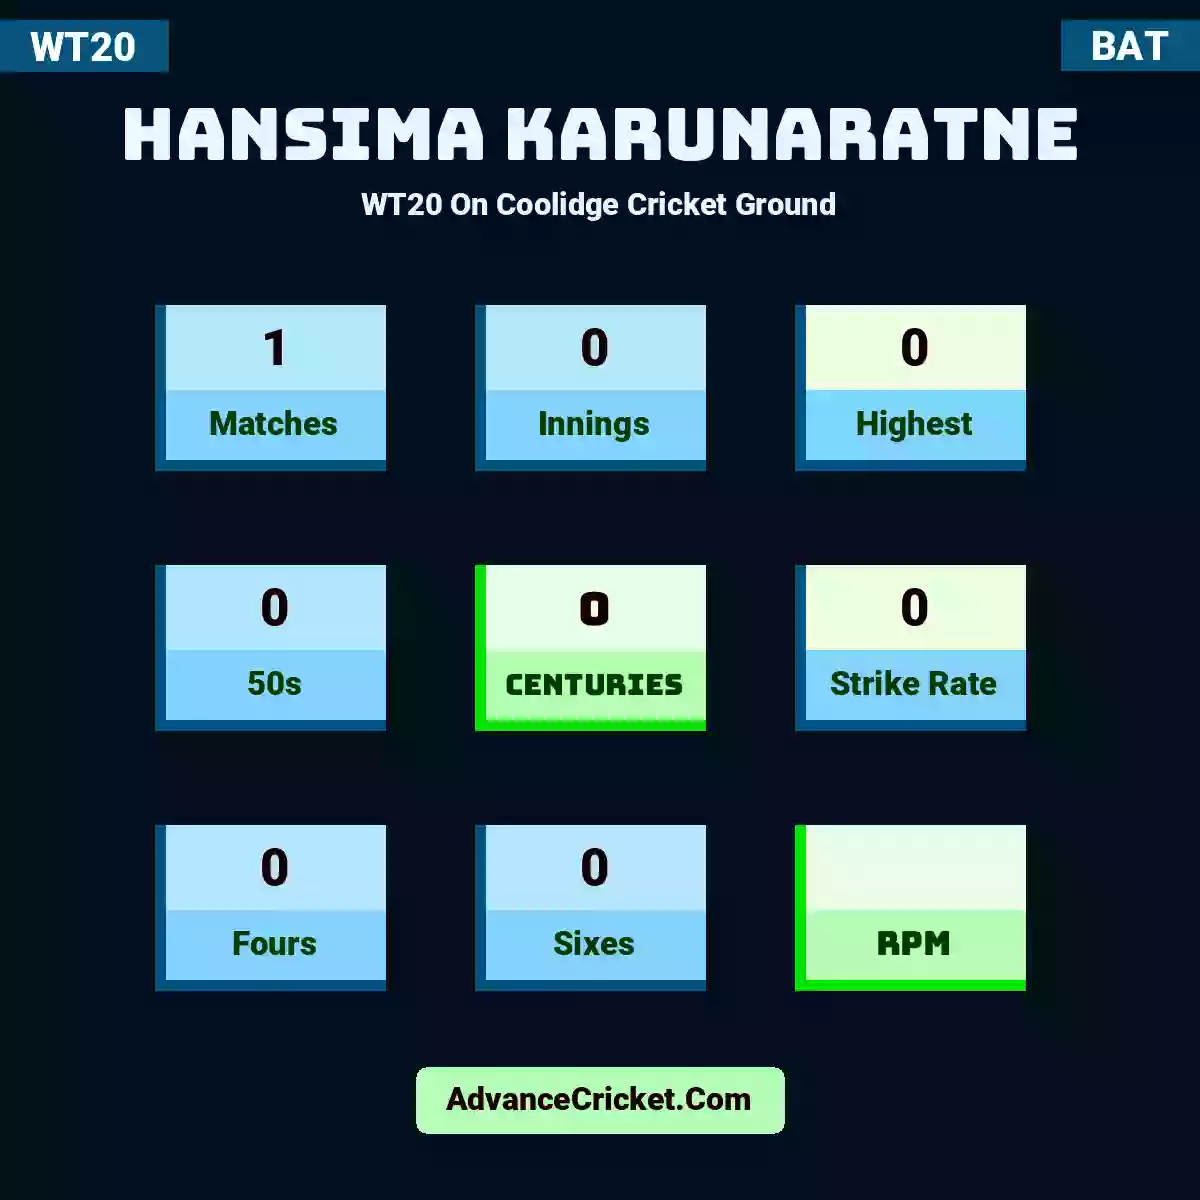 Hansima Karunaratne WT20  On Coolidge Cricket Ground, Hansima Karunaratne played 1 matches, scored 0 runs as highest, 0 half-centuries, and 0 centuries, with a strike rate of 0. H.Karunaratne hit 0 fours and 0 sixes.